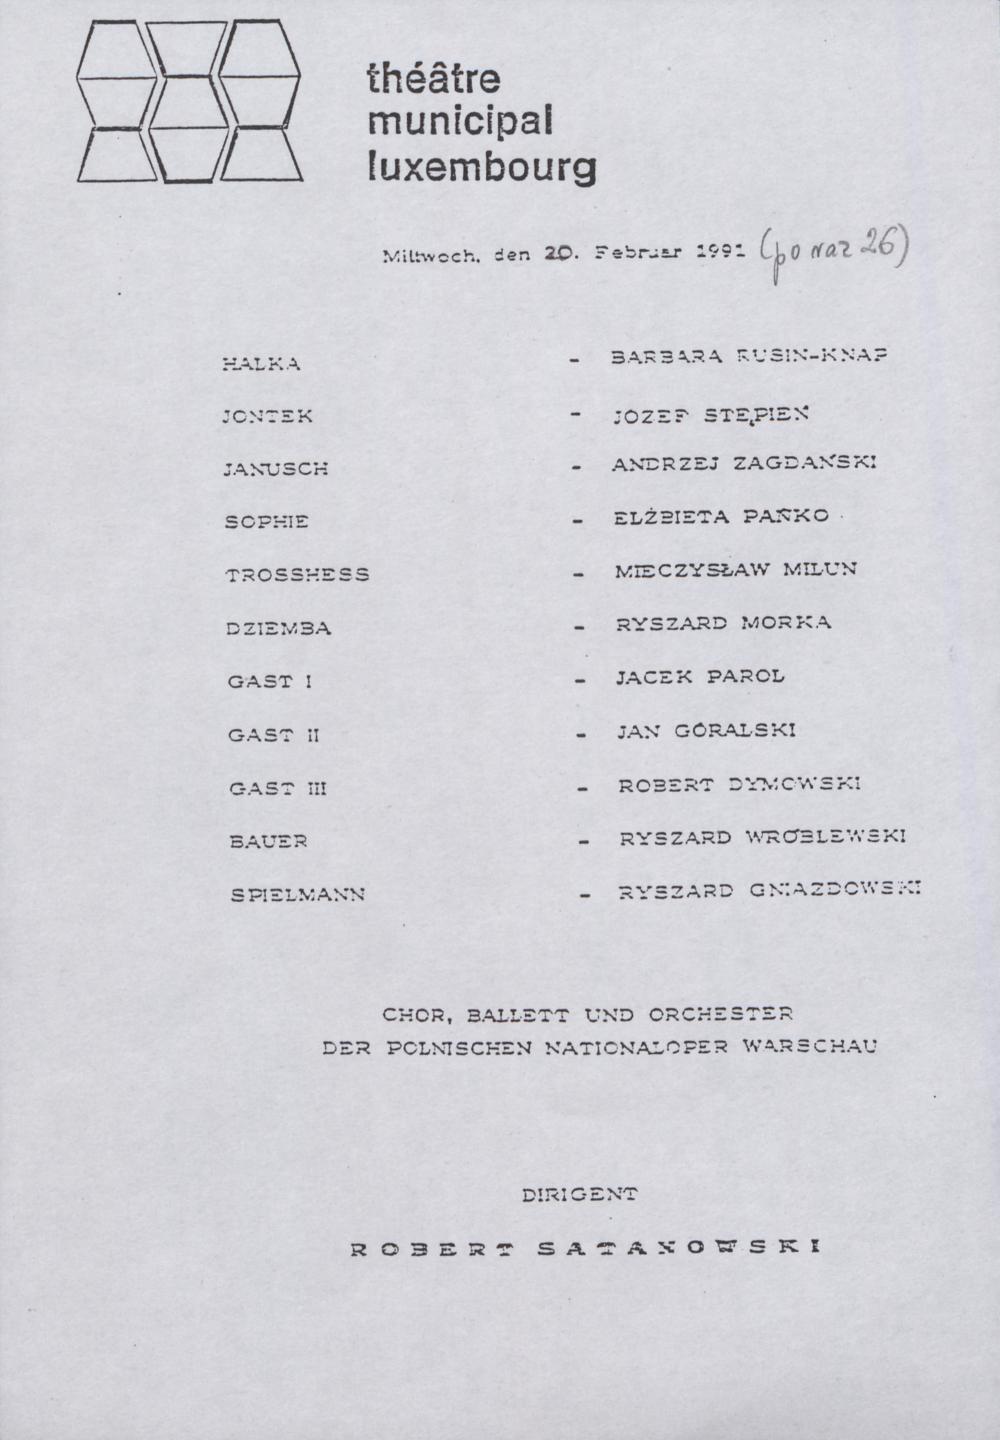 Wkładka obsadowa „Halka” Stanisław Moniuszko 20-02-1991 Tournee Luksemburg – Théâtre Municipal Luxembourg (Teatr Narodowy w Luksemburgu)